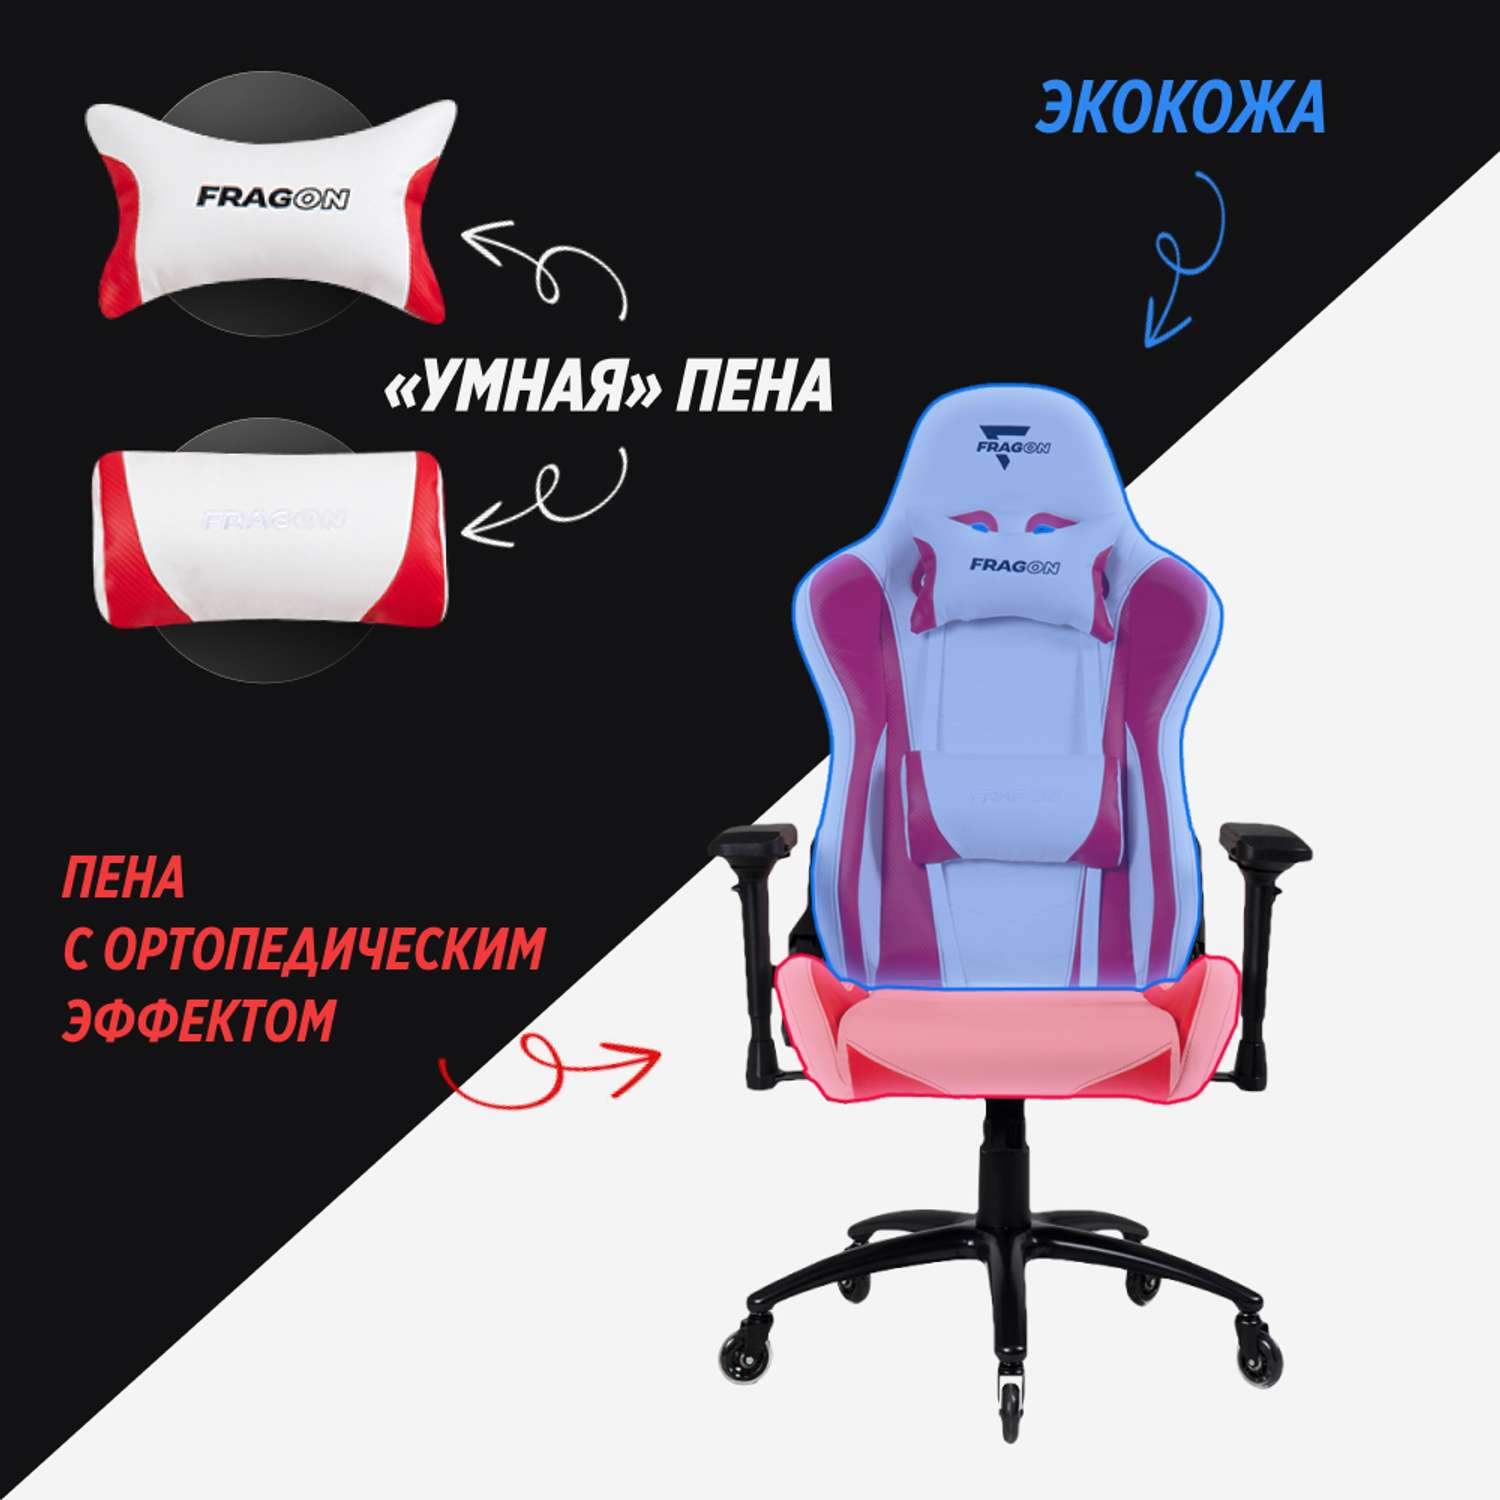 Компьютерное кресло GLHF серия 5X White/Red - фото 4